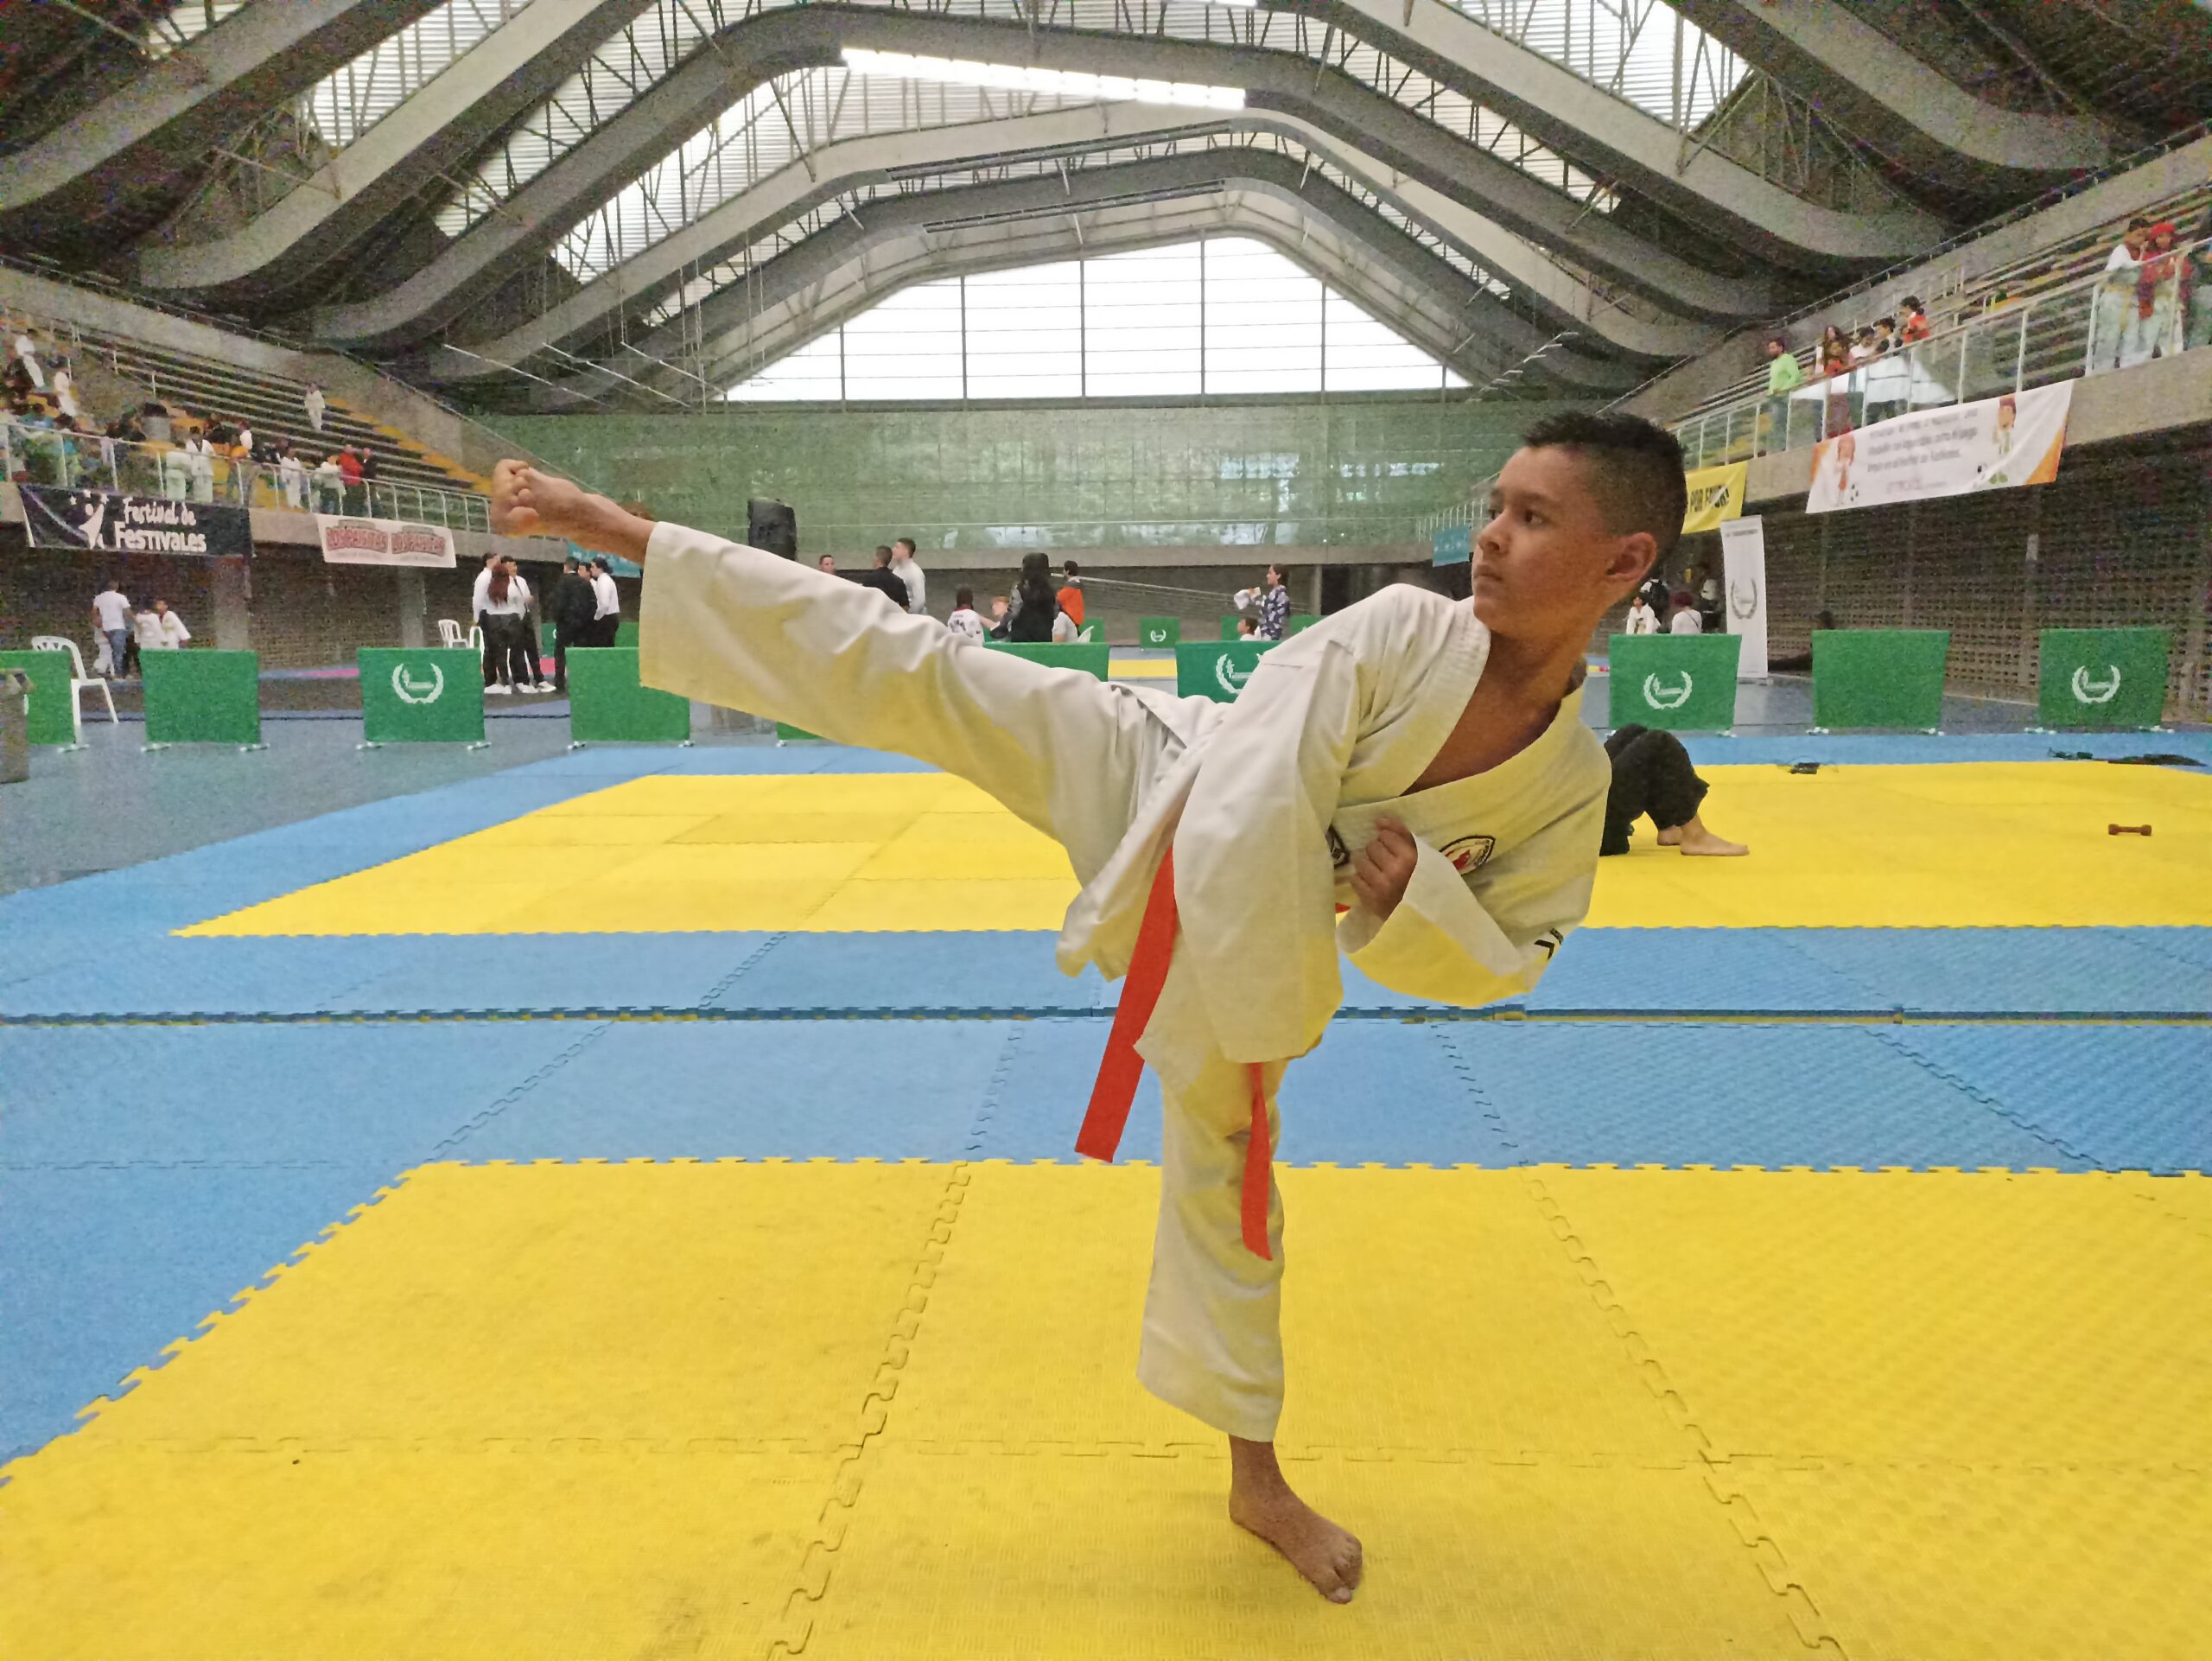 https://festivaldefestivales.com/wp-content/uploads/2023/01/foto-de-juan-jose-taekwondo-scaled.jpg